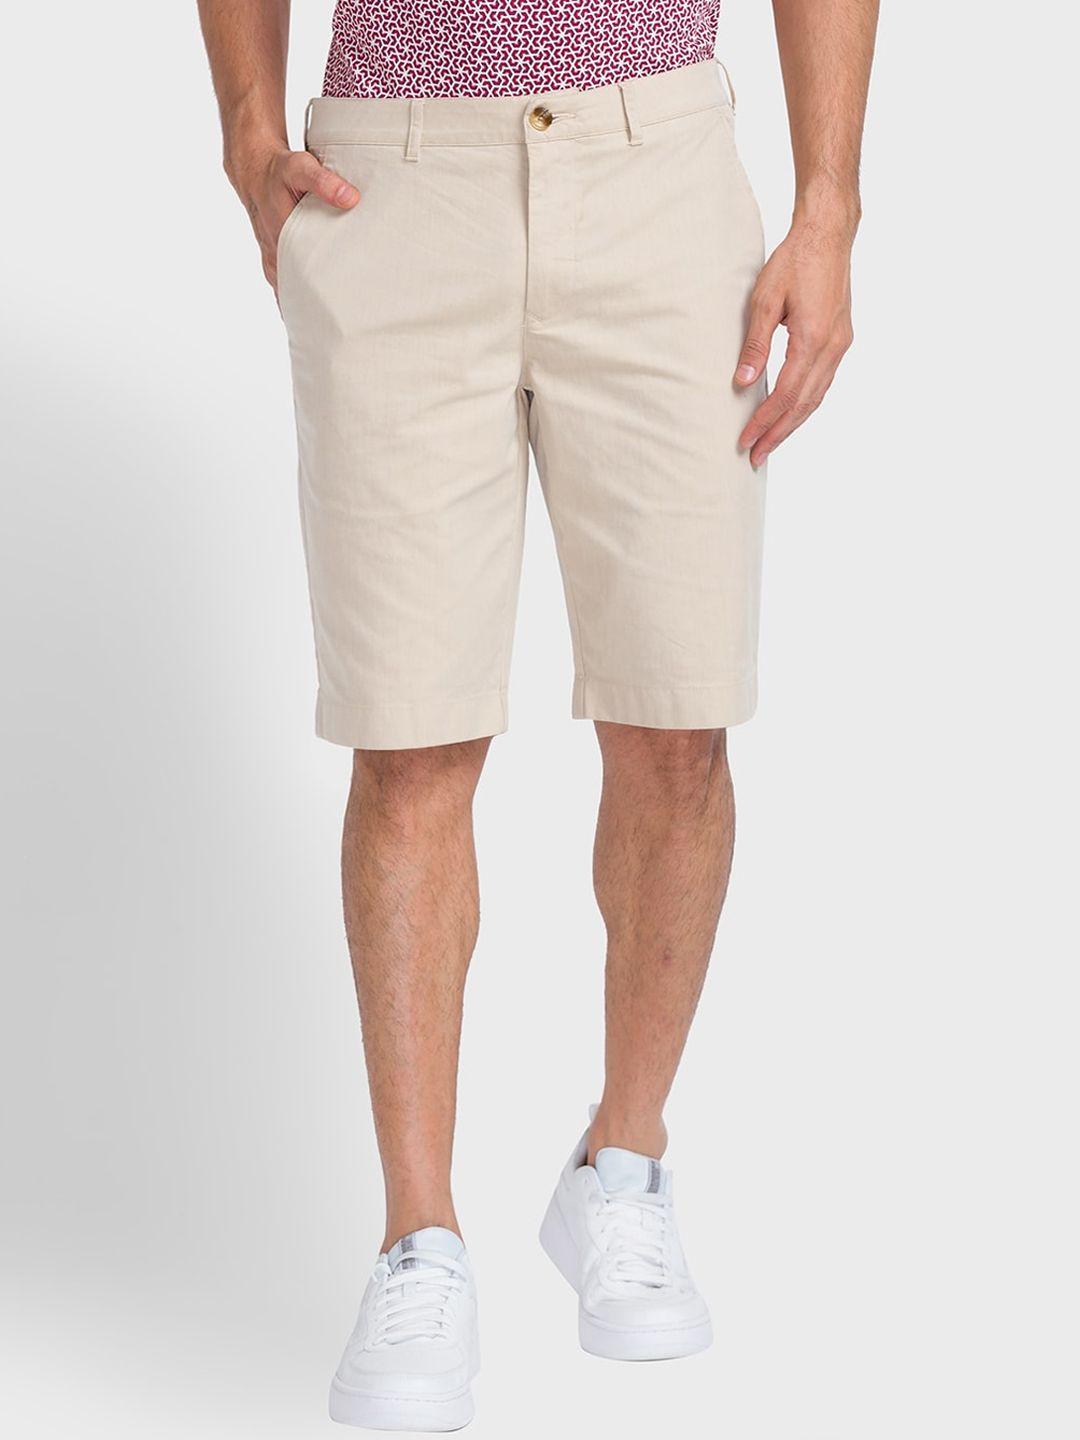 colorplus-men-regular-fit-chinos-shorts